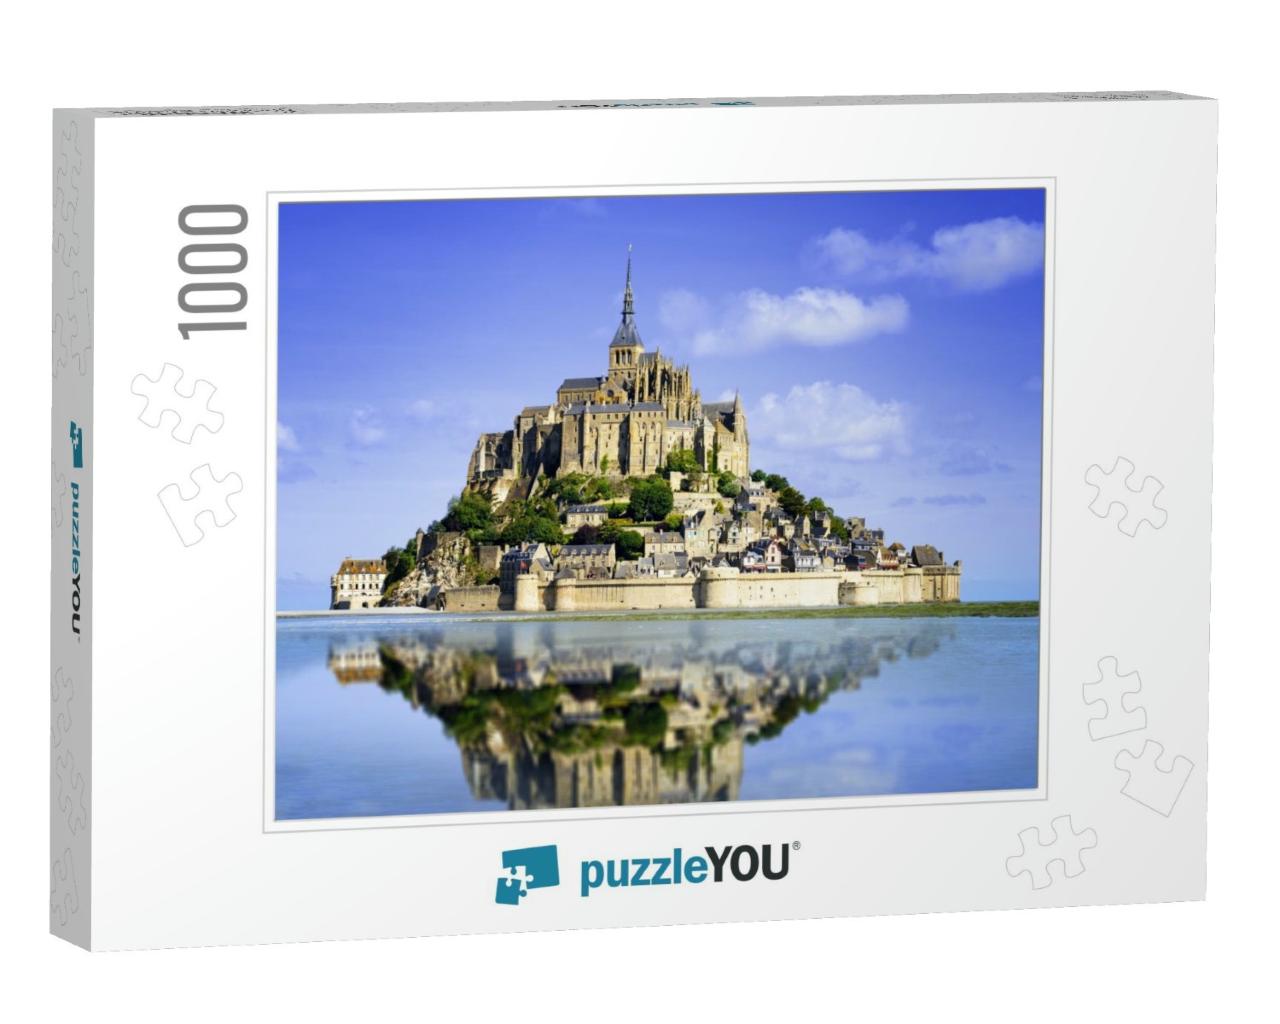 Mont Saint Michel - Normandy - France... Jigsaw Puzzle with 1000 pieces